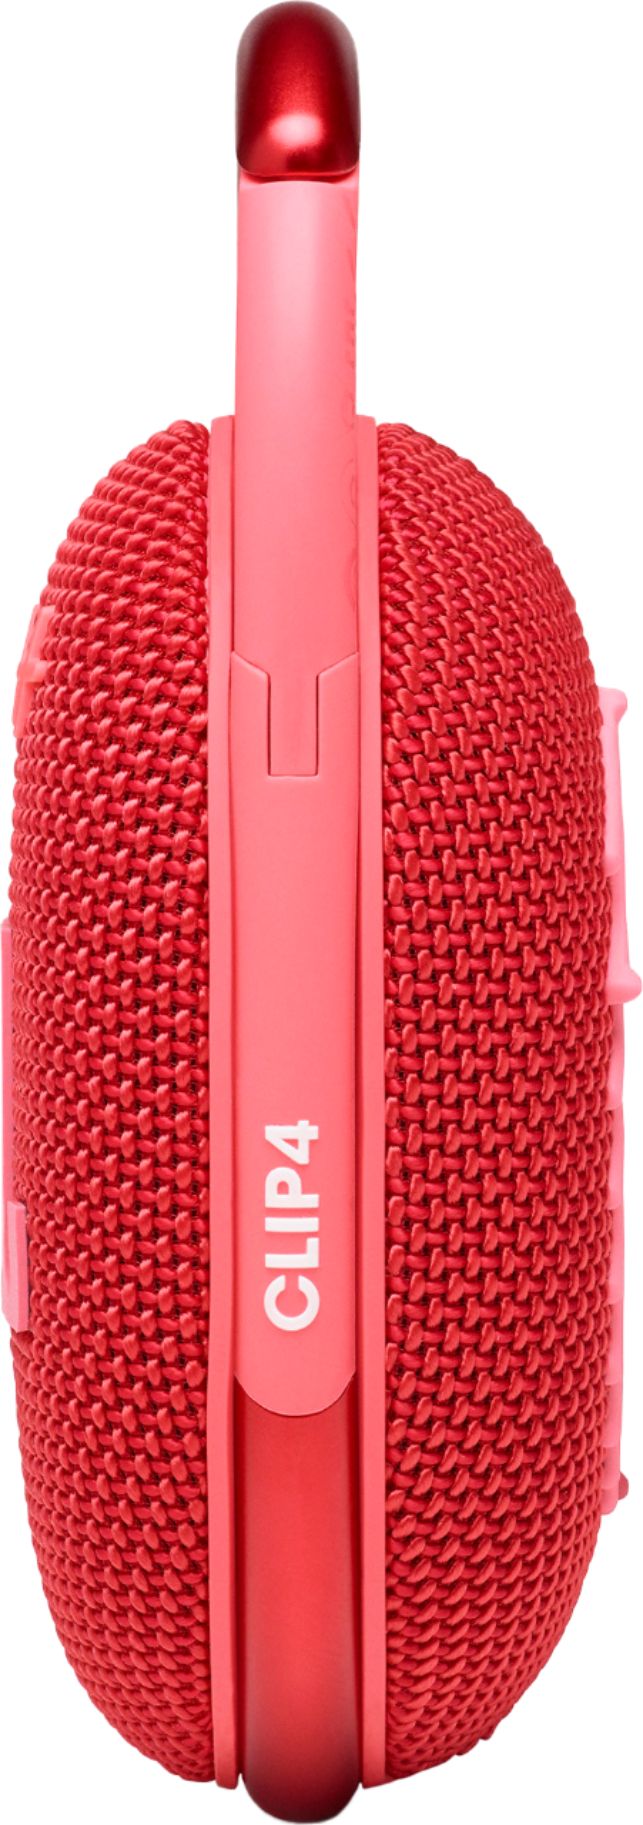 JBL - CLIP4 Portable Bluetooth Speaker - Red_8